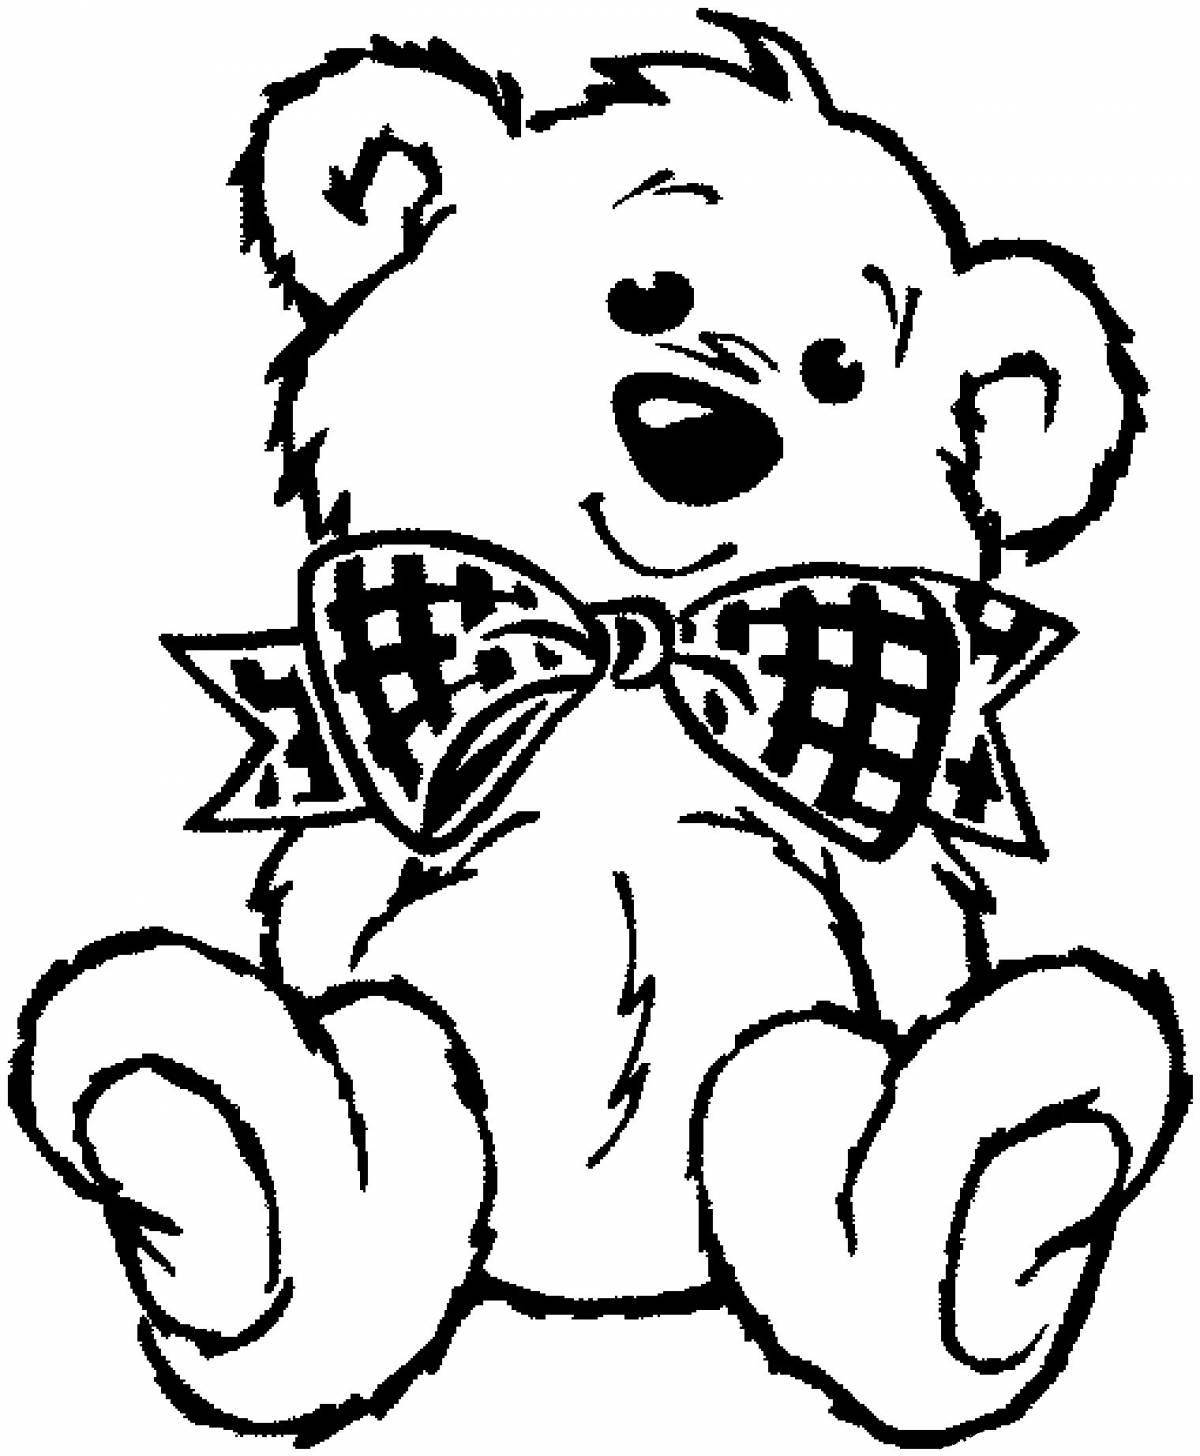 Coloring book fluffy teddy bear